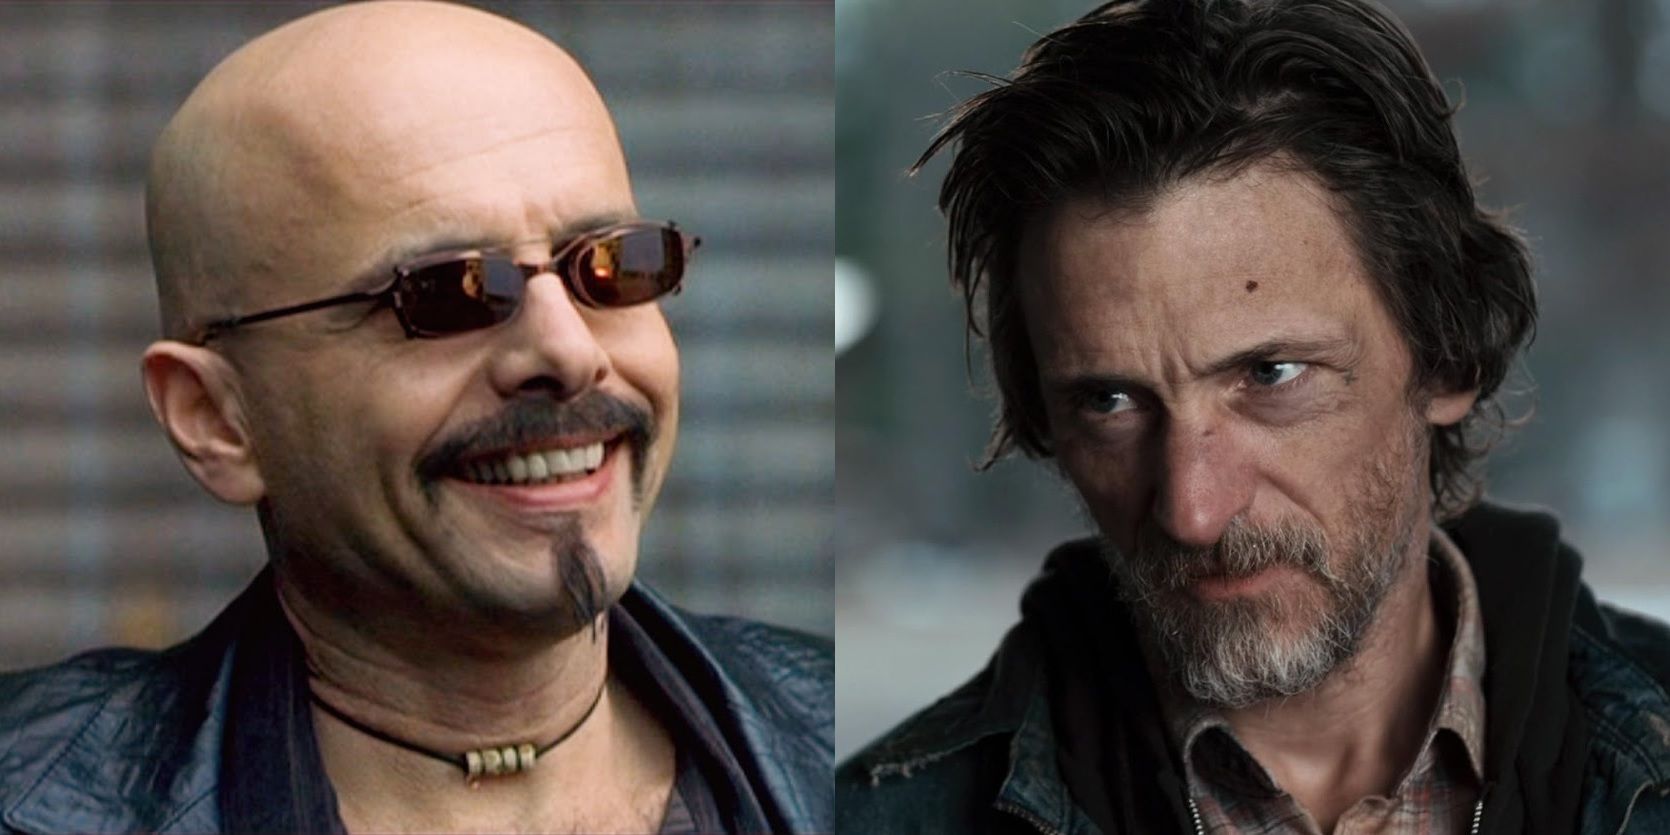 Joe Pantoliano as Cypher in The Matrix, with John Hawkes in Winter's Bone